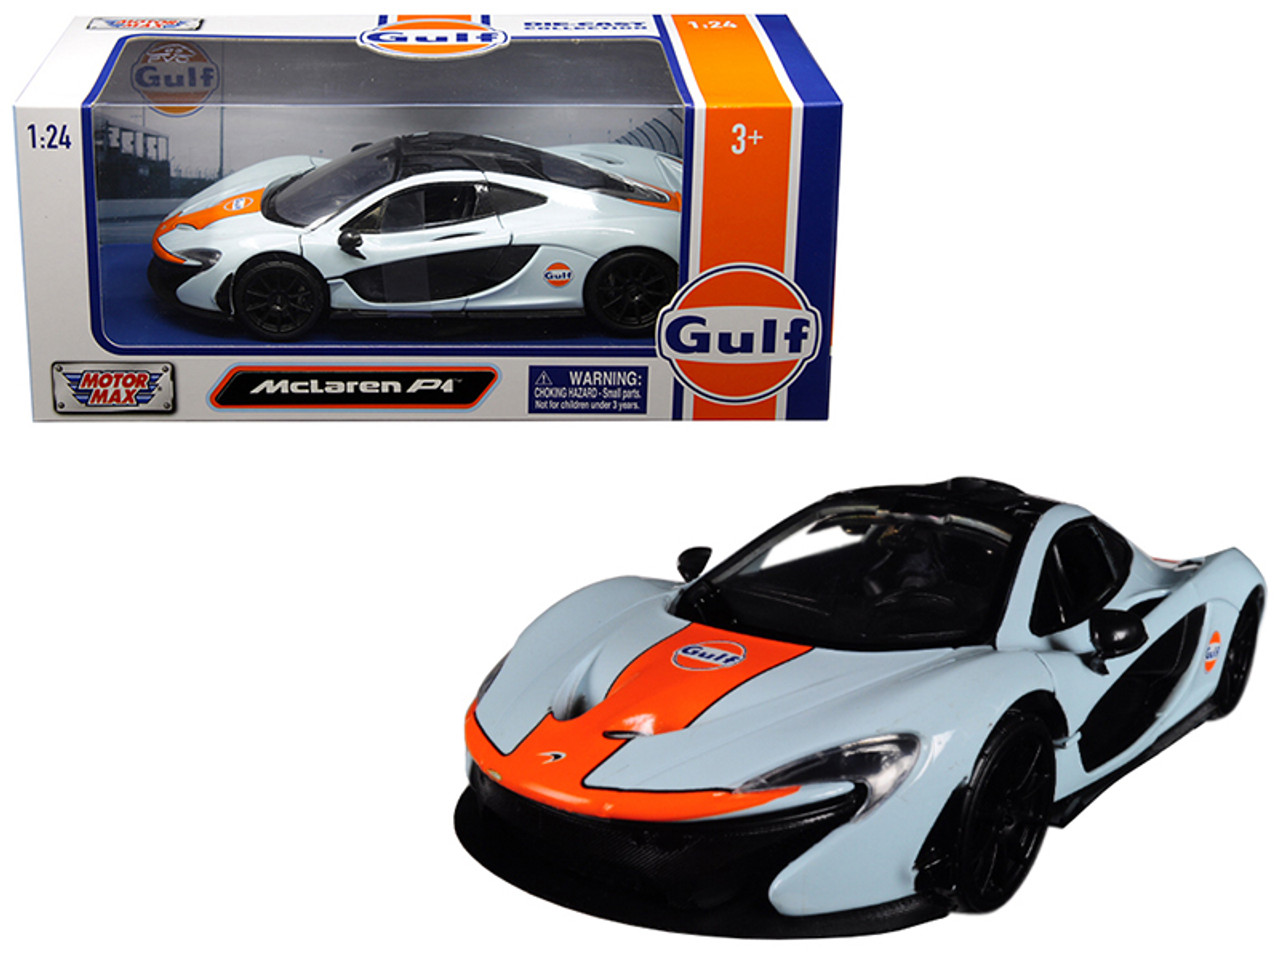 1/24 Motormax McLaren P1 with "Gulf" Livery Light Blue with Orange Stripe Diecast Car Model